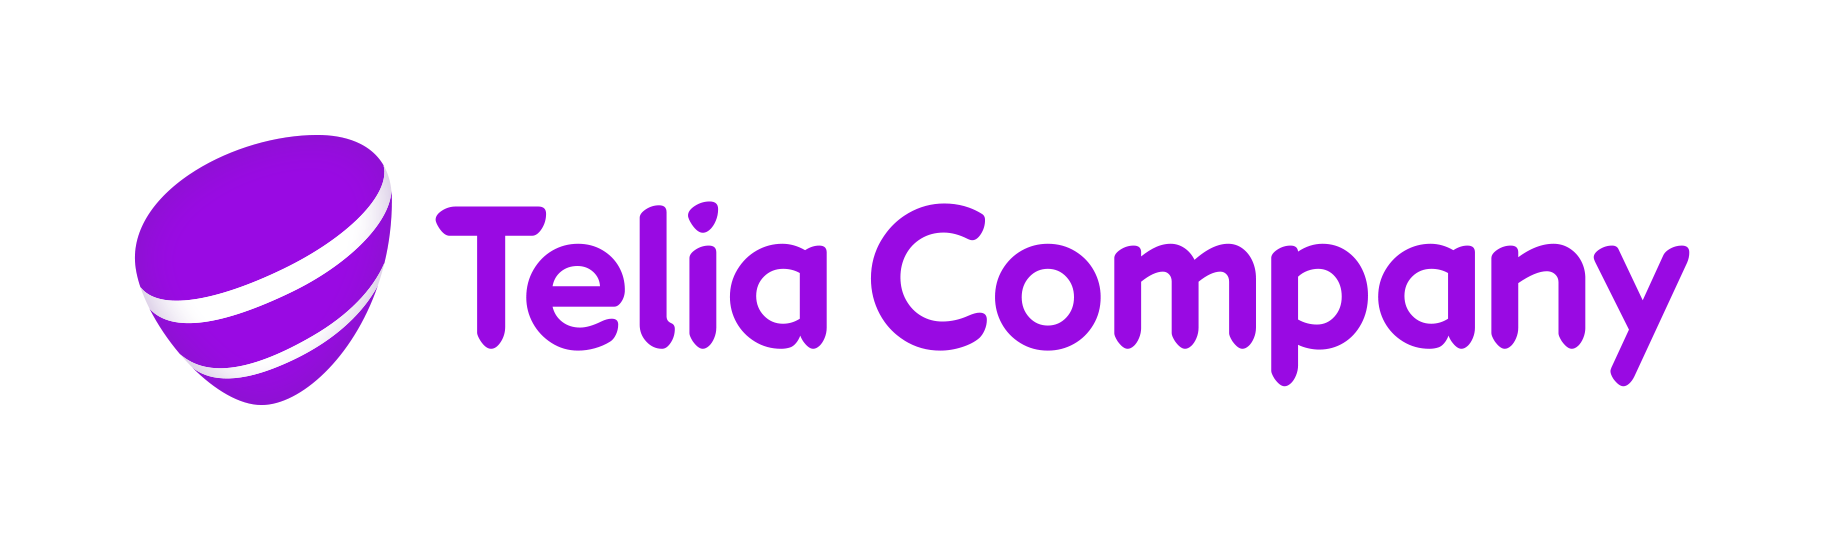 Telia Company Brand Logo